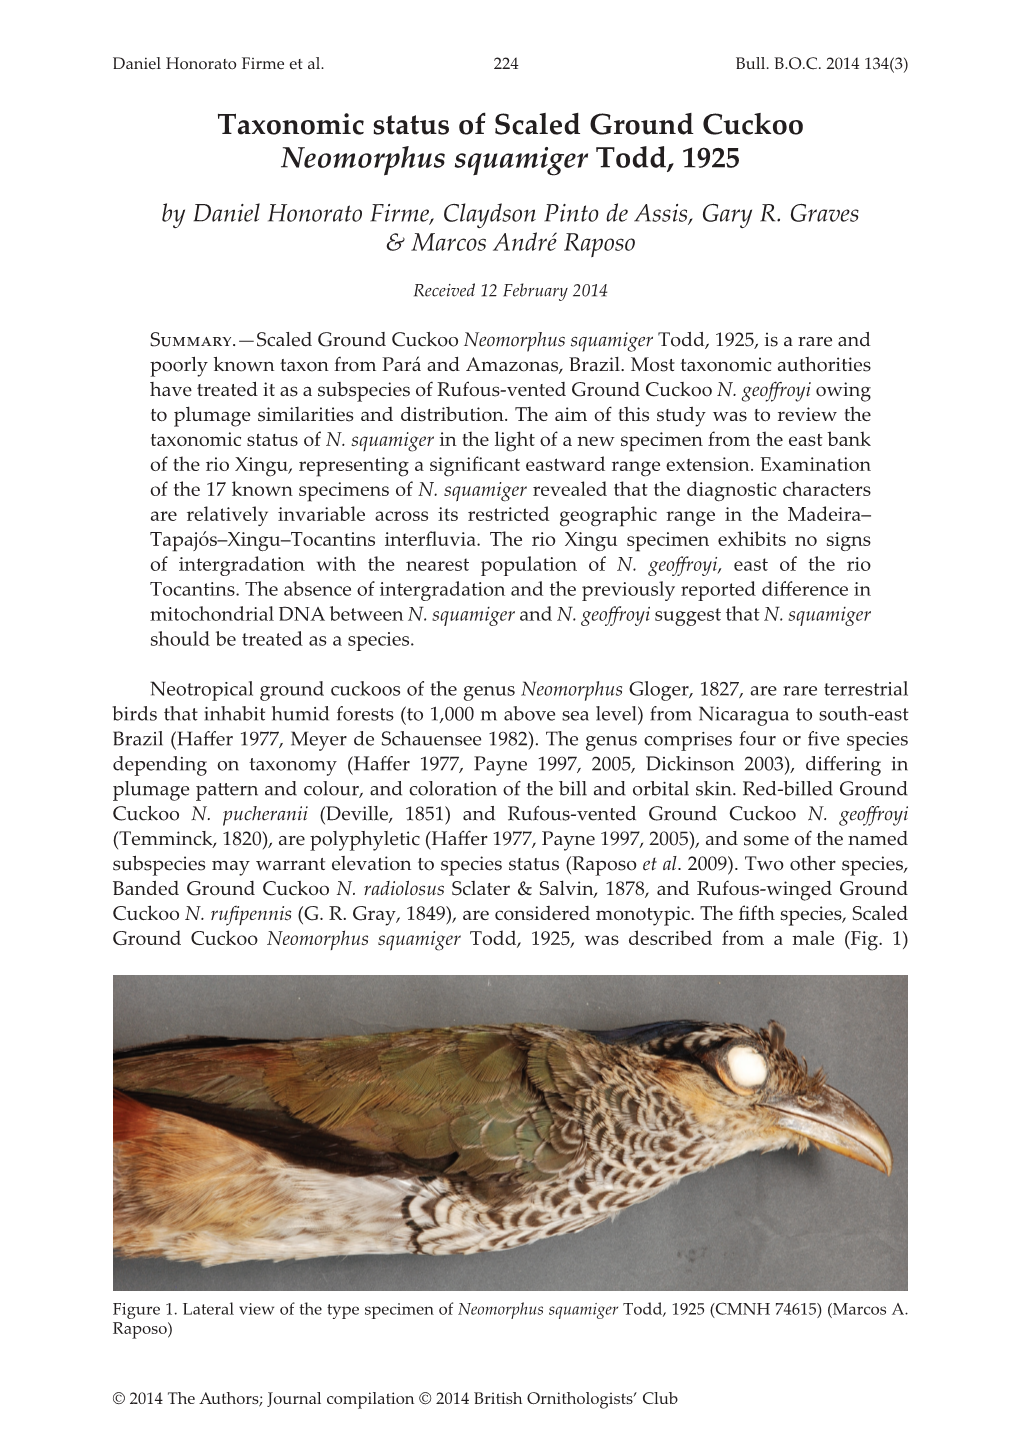 Taxonomic Status of Scaled Ground Cuckoo Neomorphus Squamiger Todd, 1925